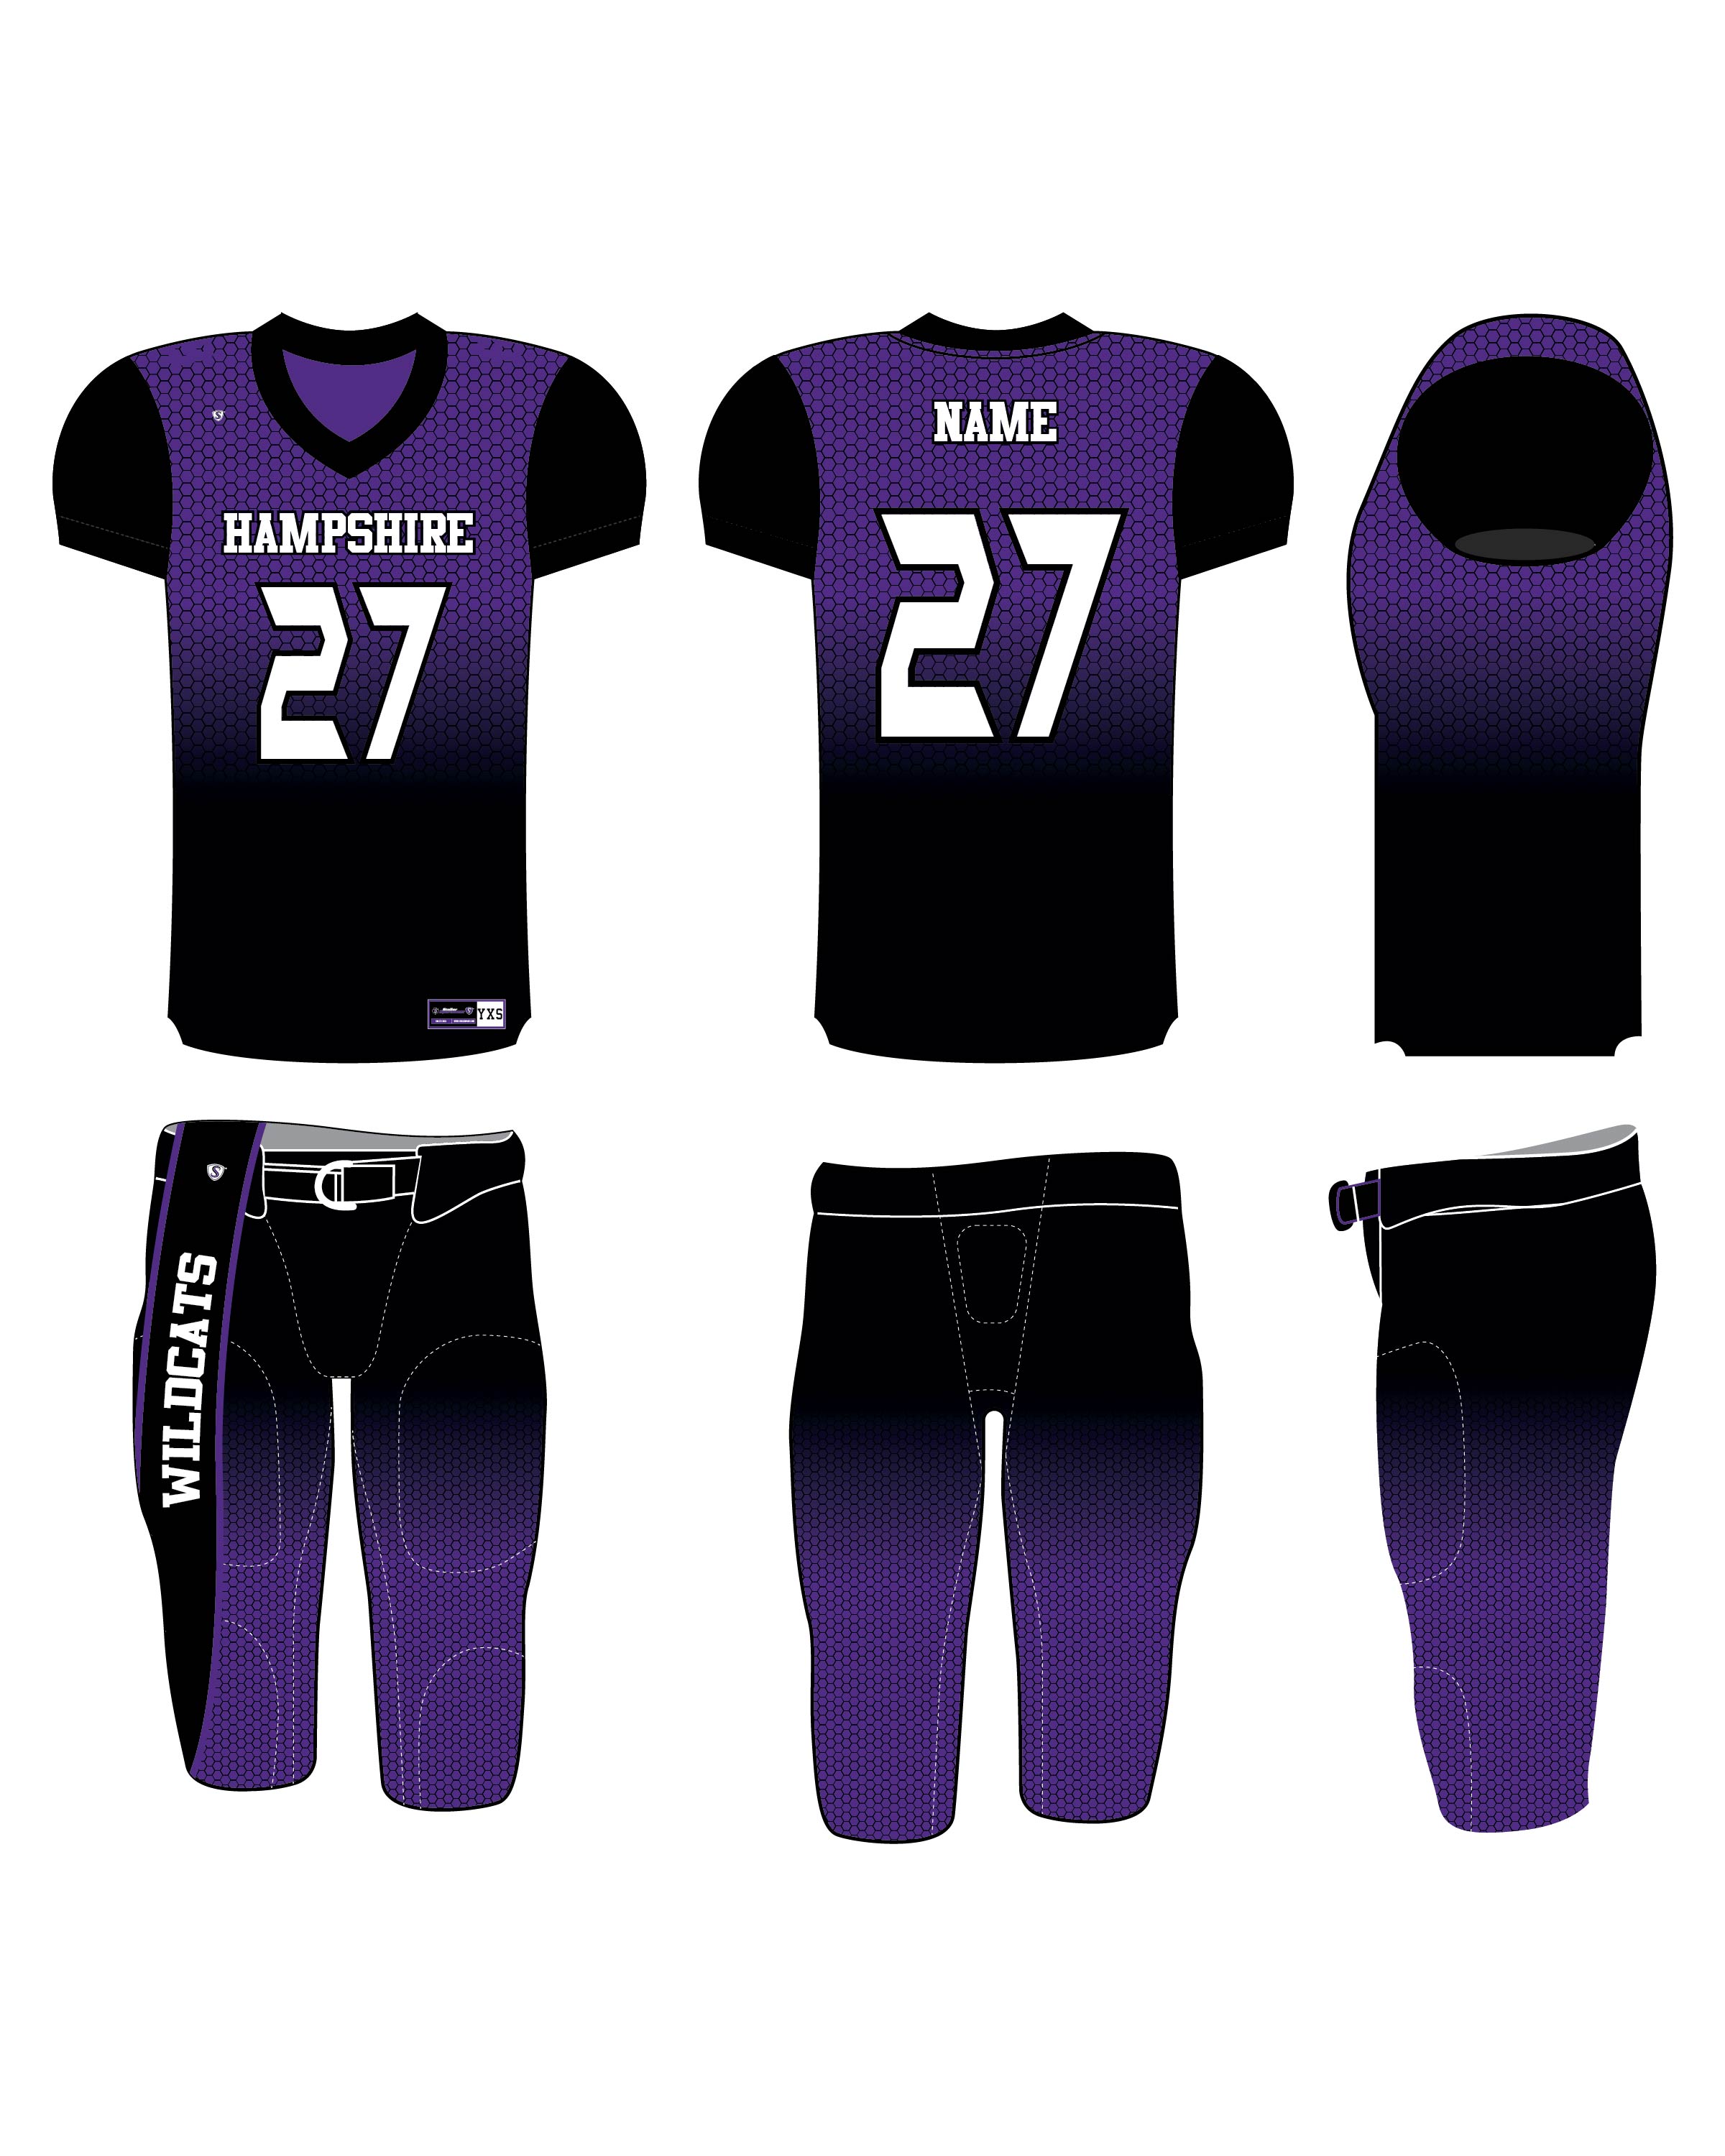 Custom Sublimated Football Uniform - Hampshire 3